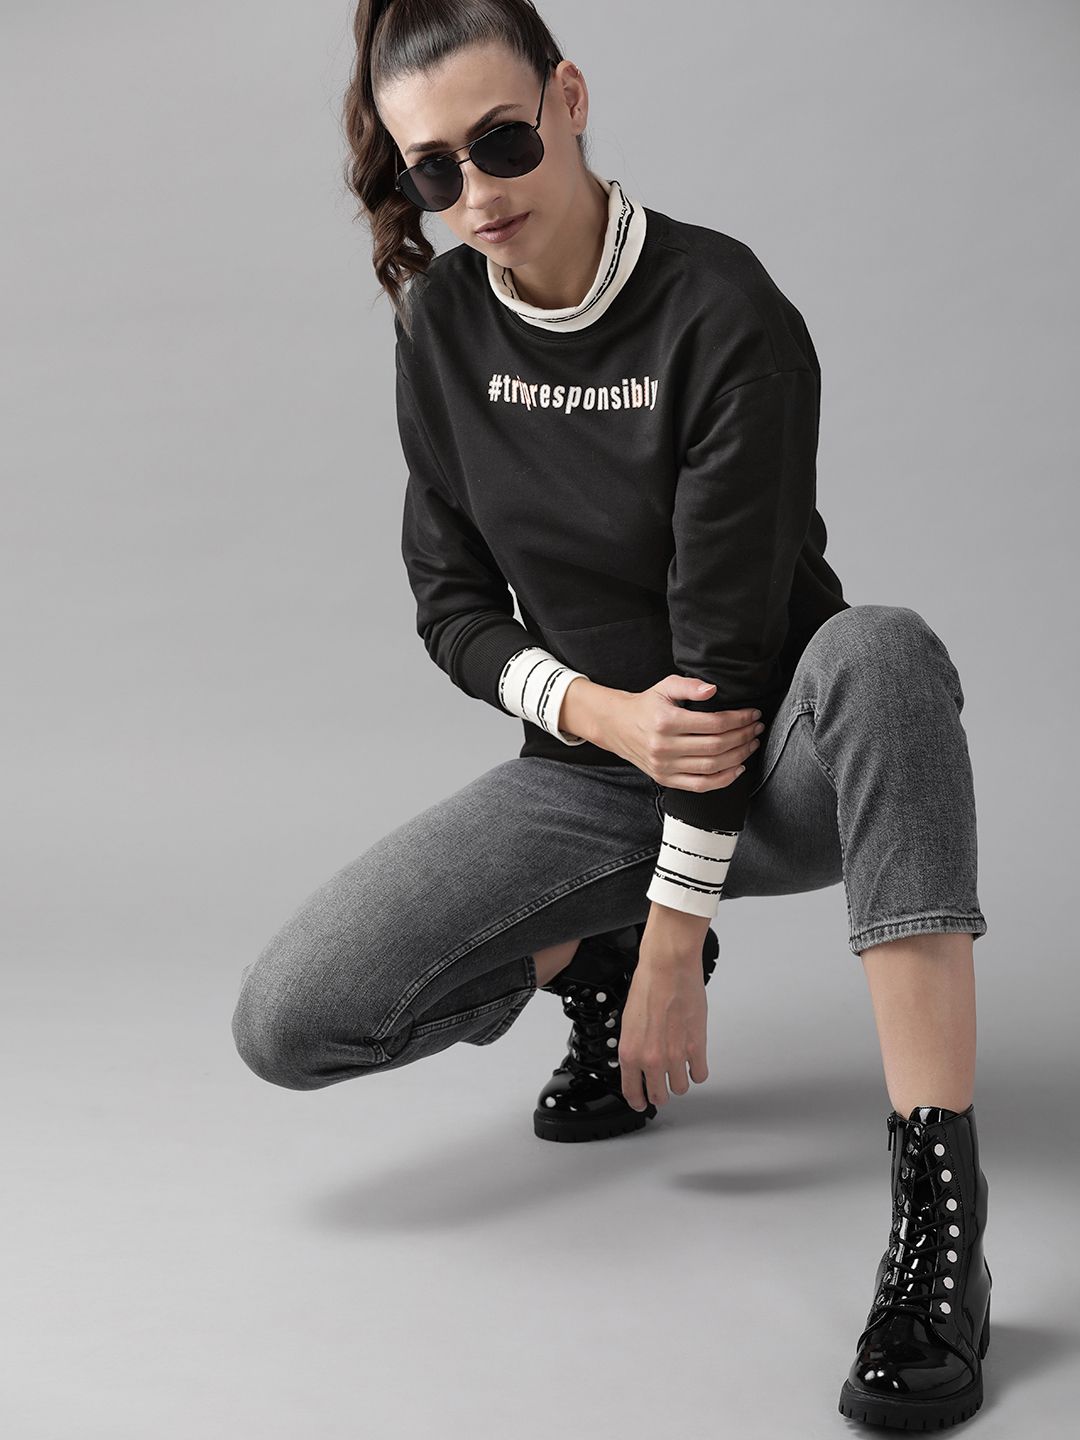 Roadster Women Black & White Typography Print Sweatshirt Price in India